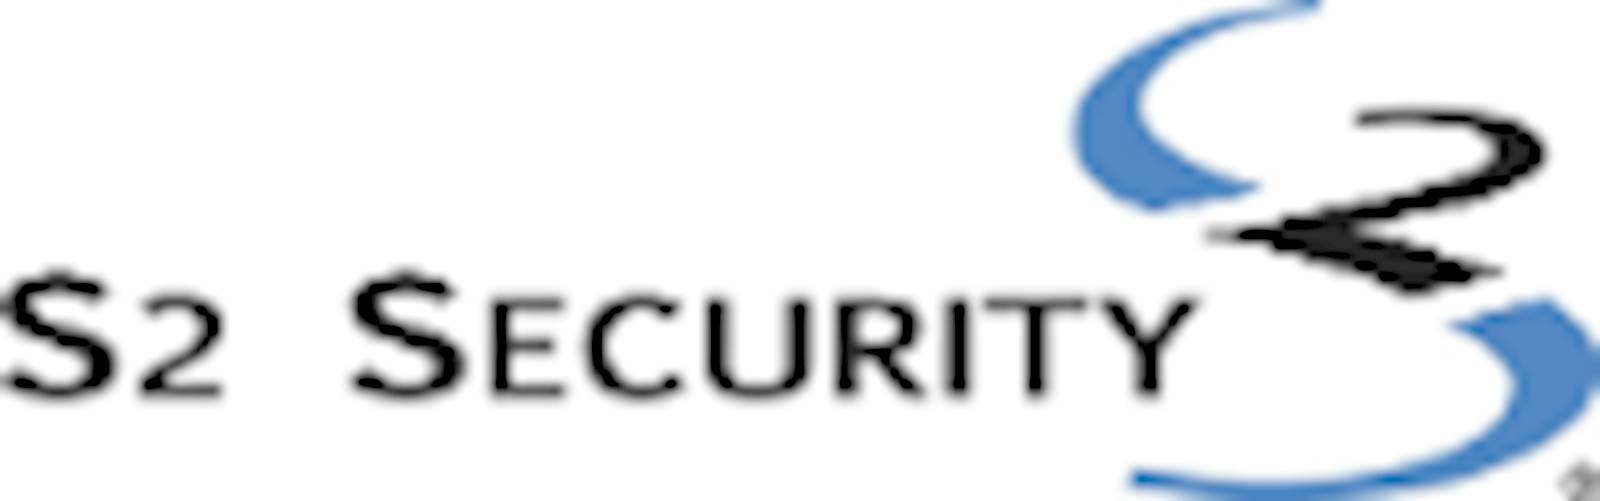 S2 Security (logo)